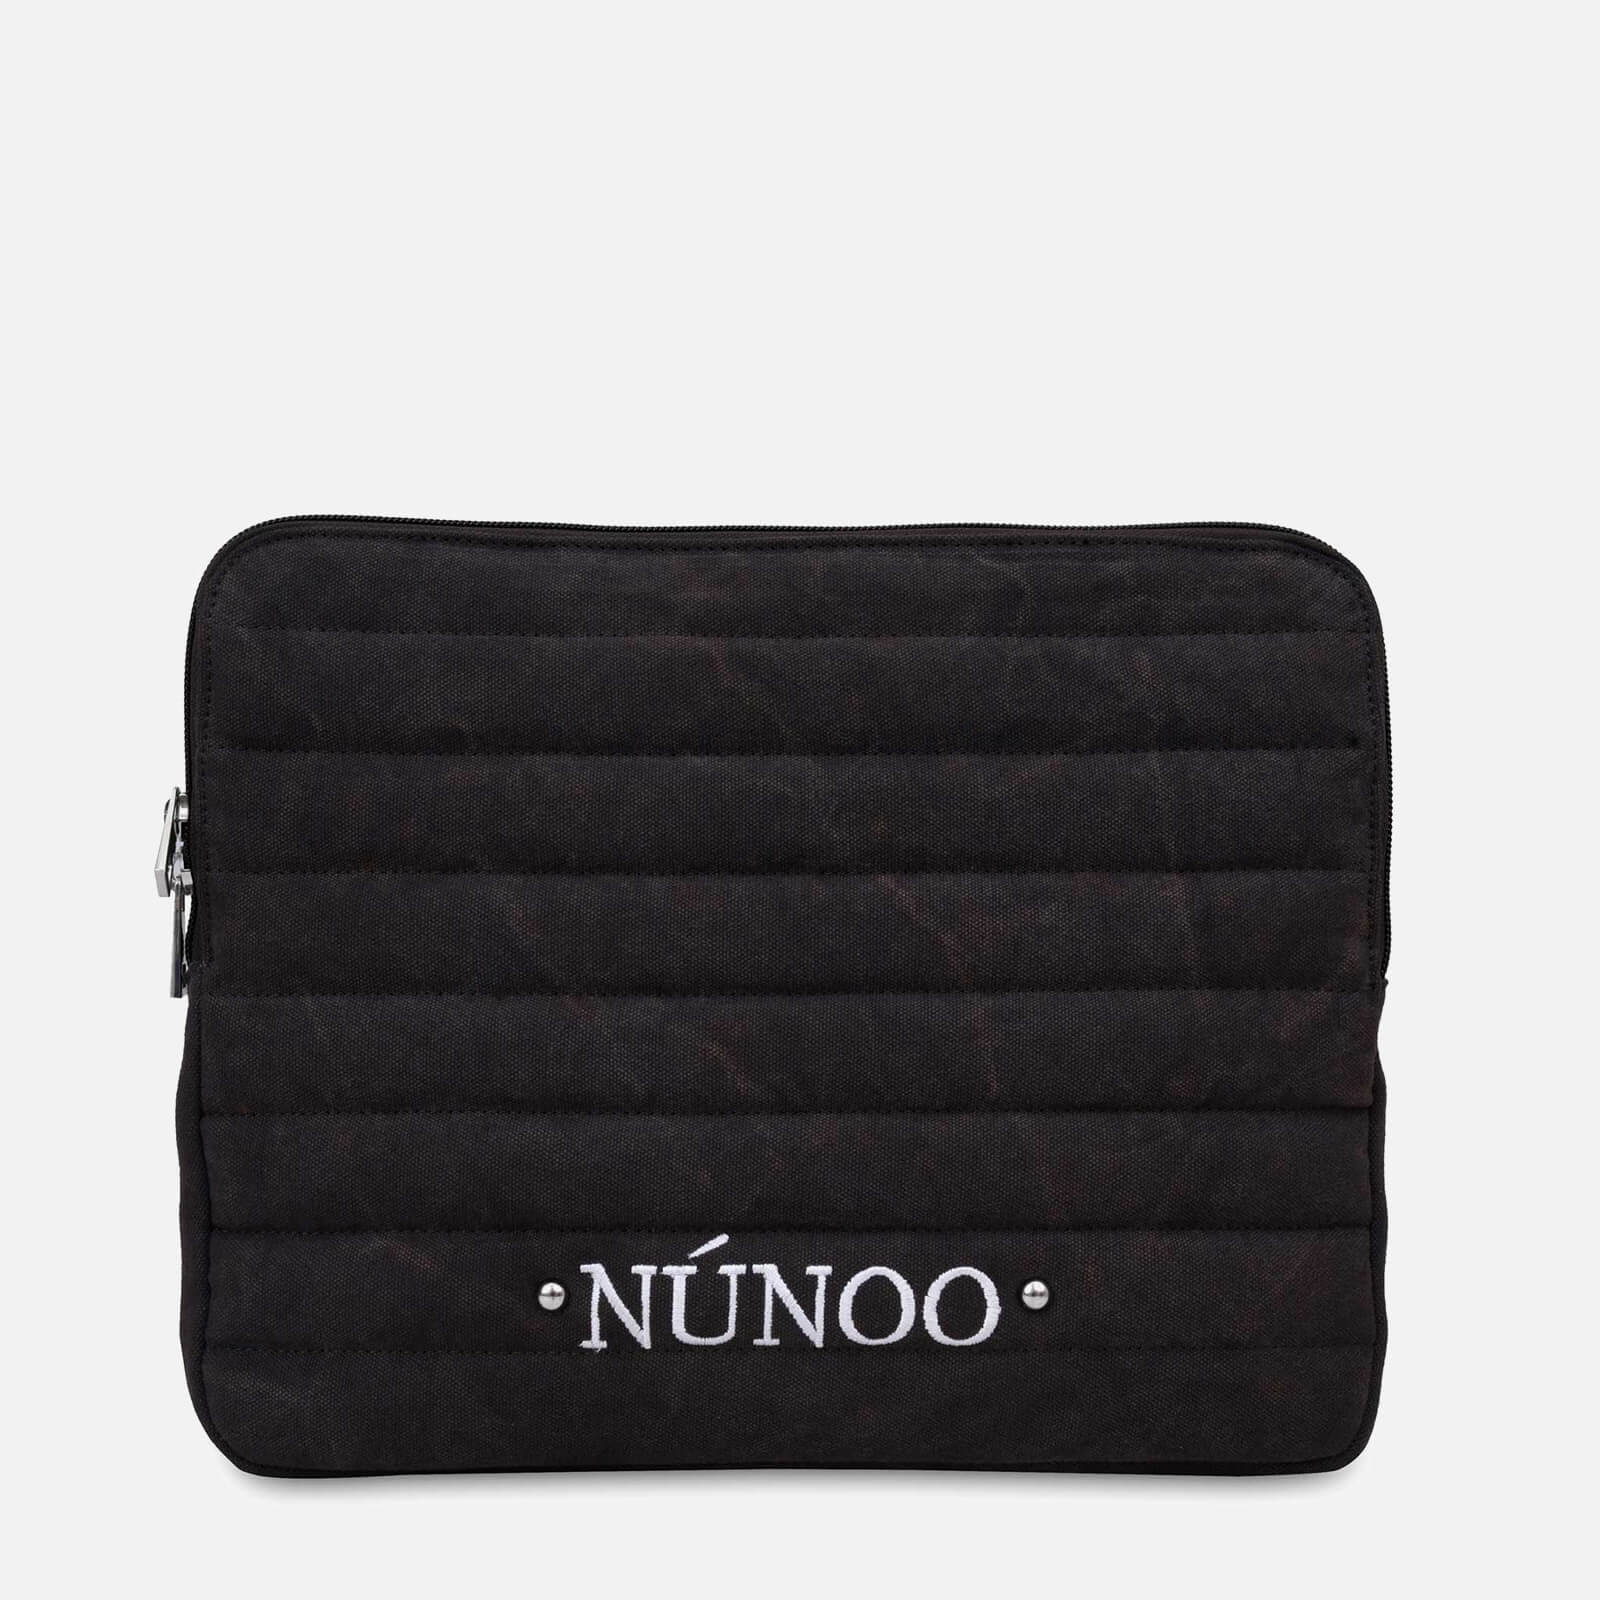 Nunoo Recycled Canvas Laptop Bag